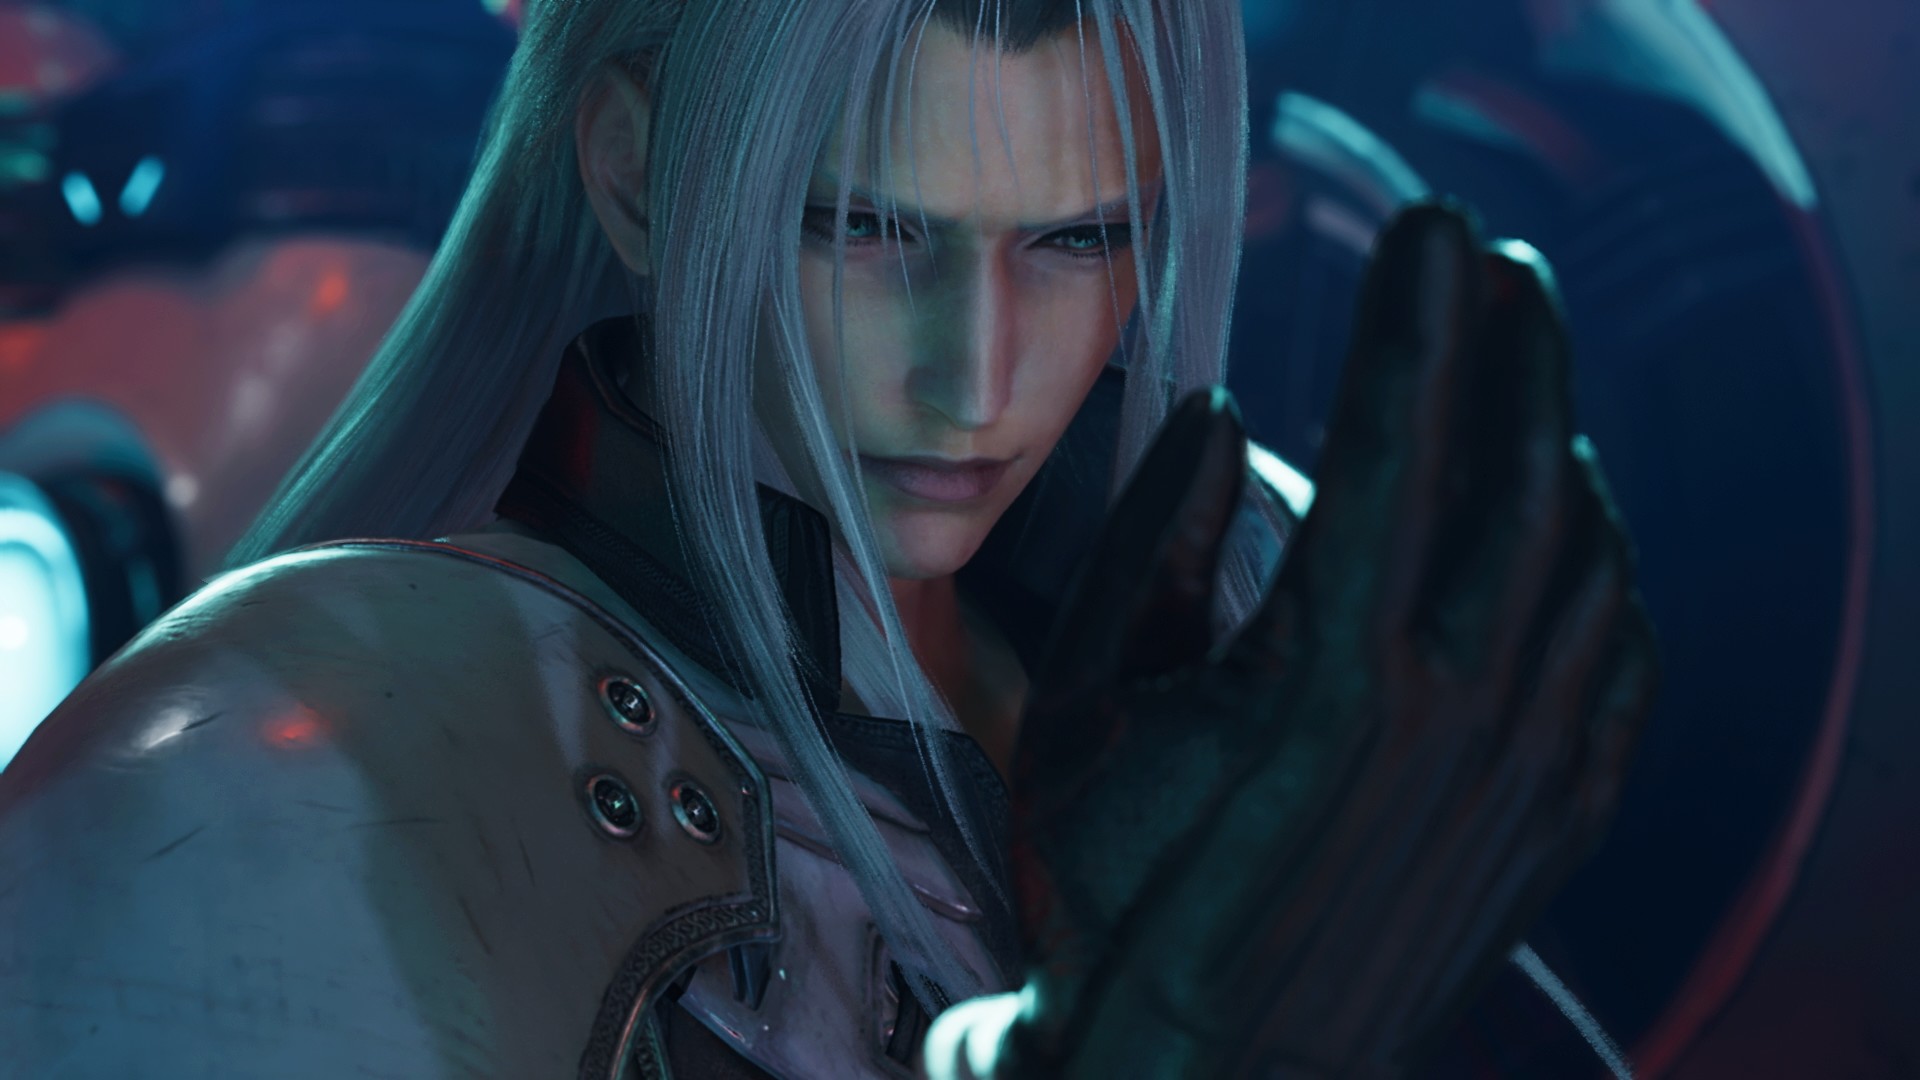 Sephiroth de Final Fantasy 7 Rebirth regardant sa main en contemplation